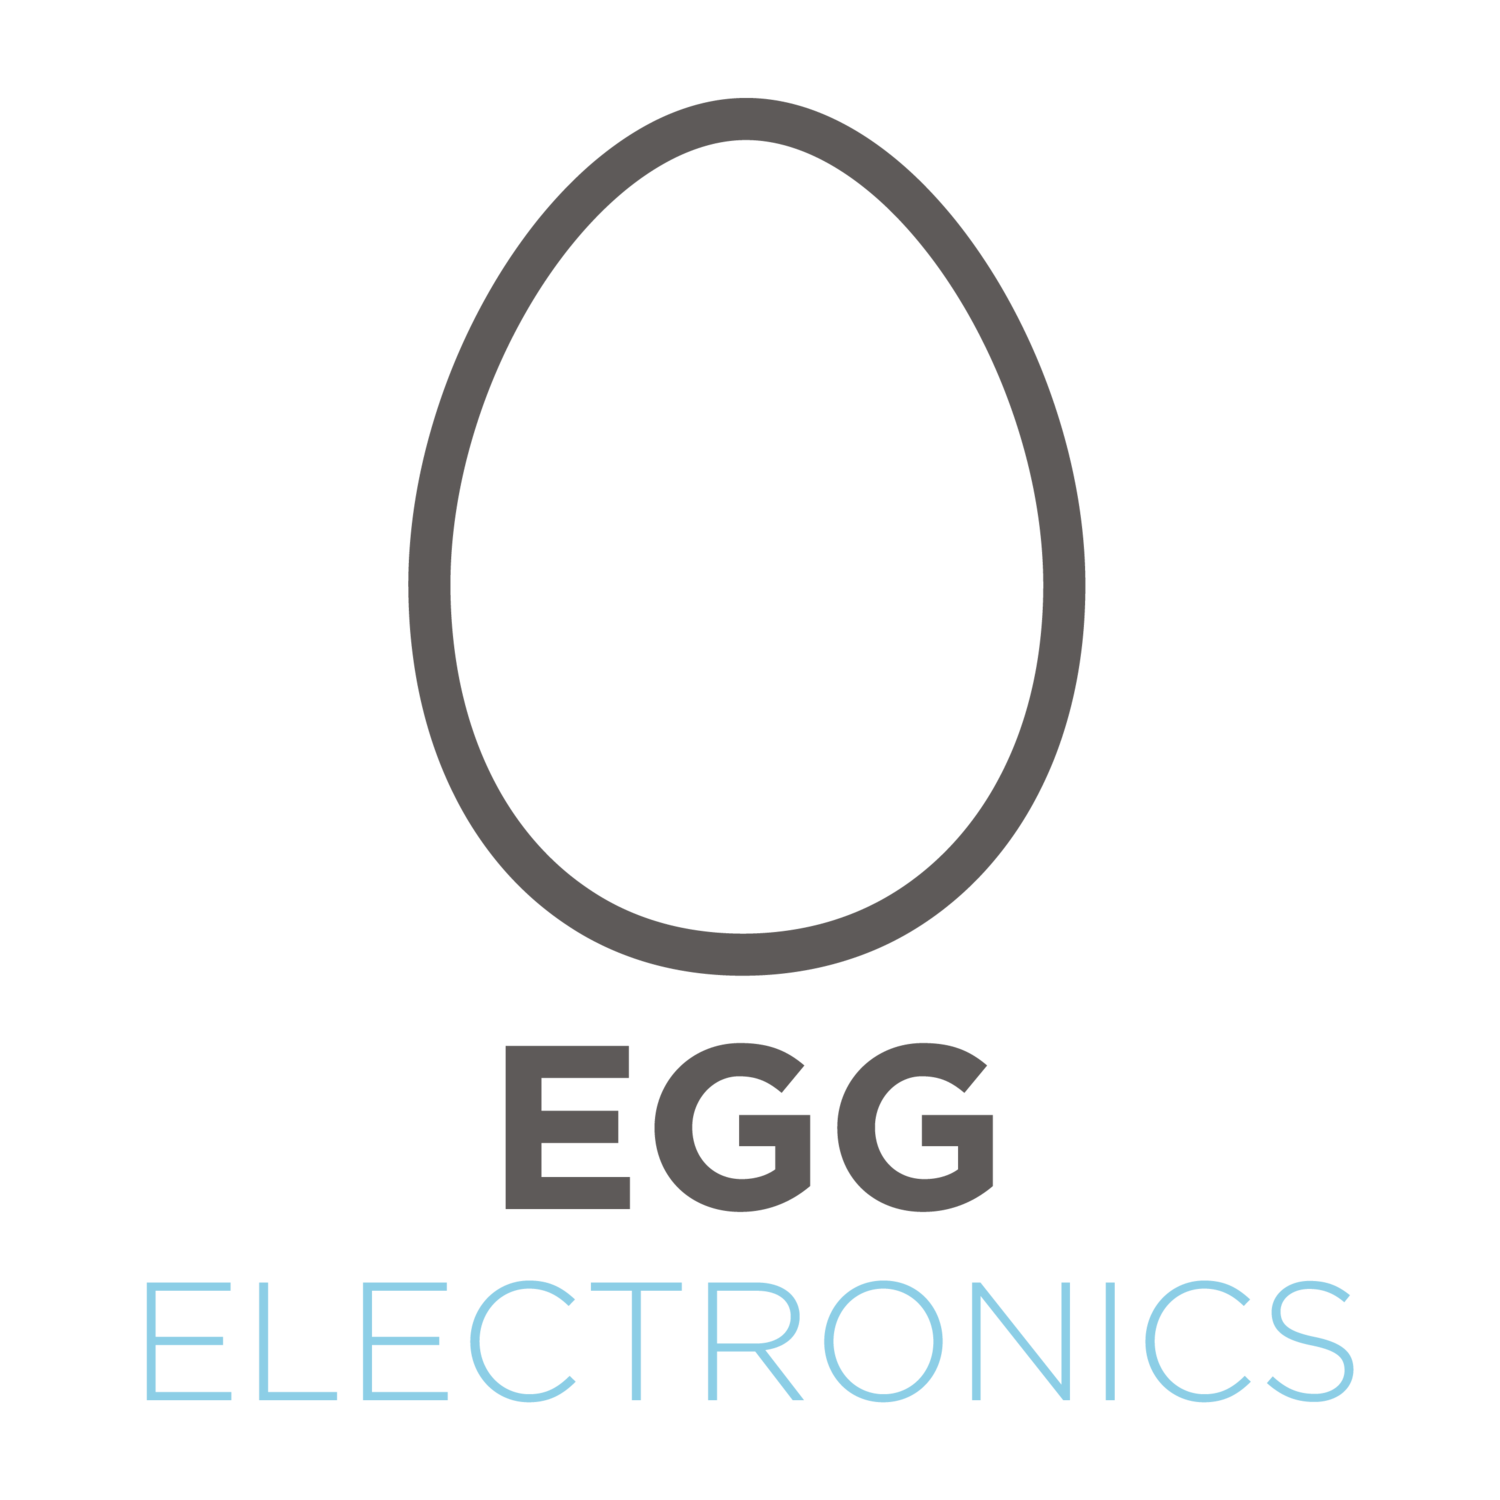 I and the Egg Logo - EGG Electronics